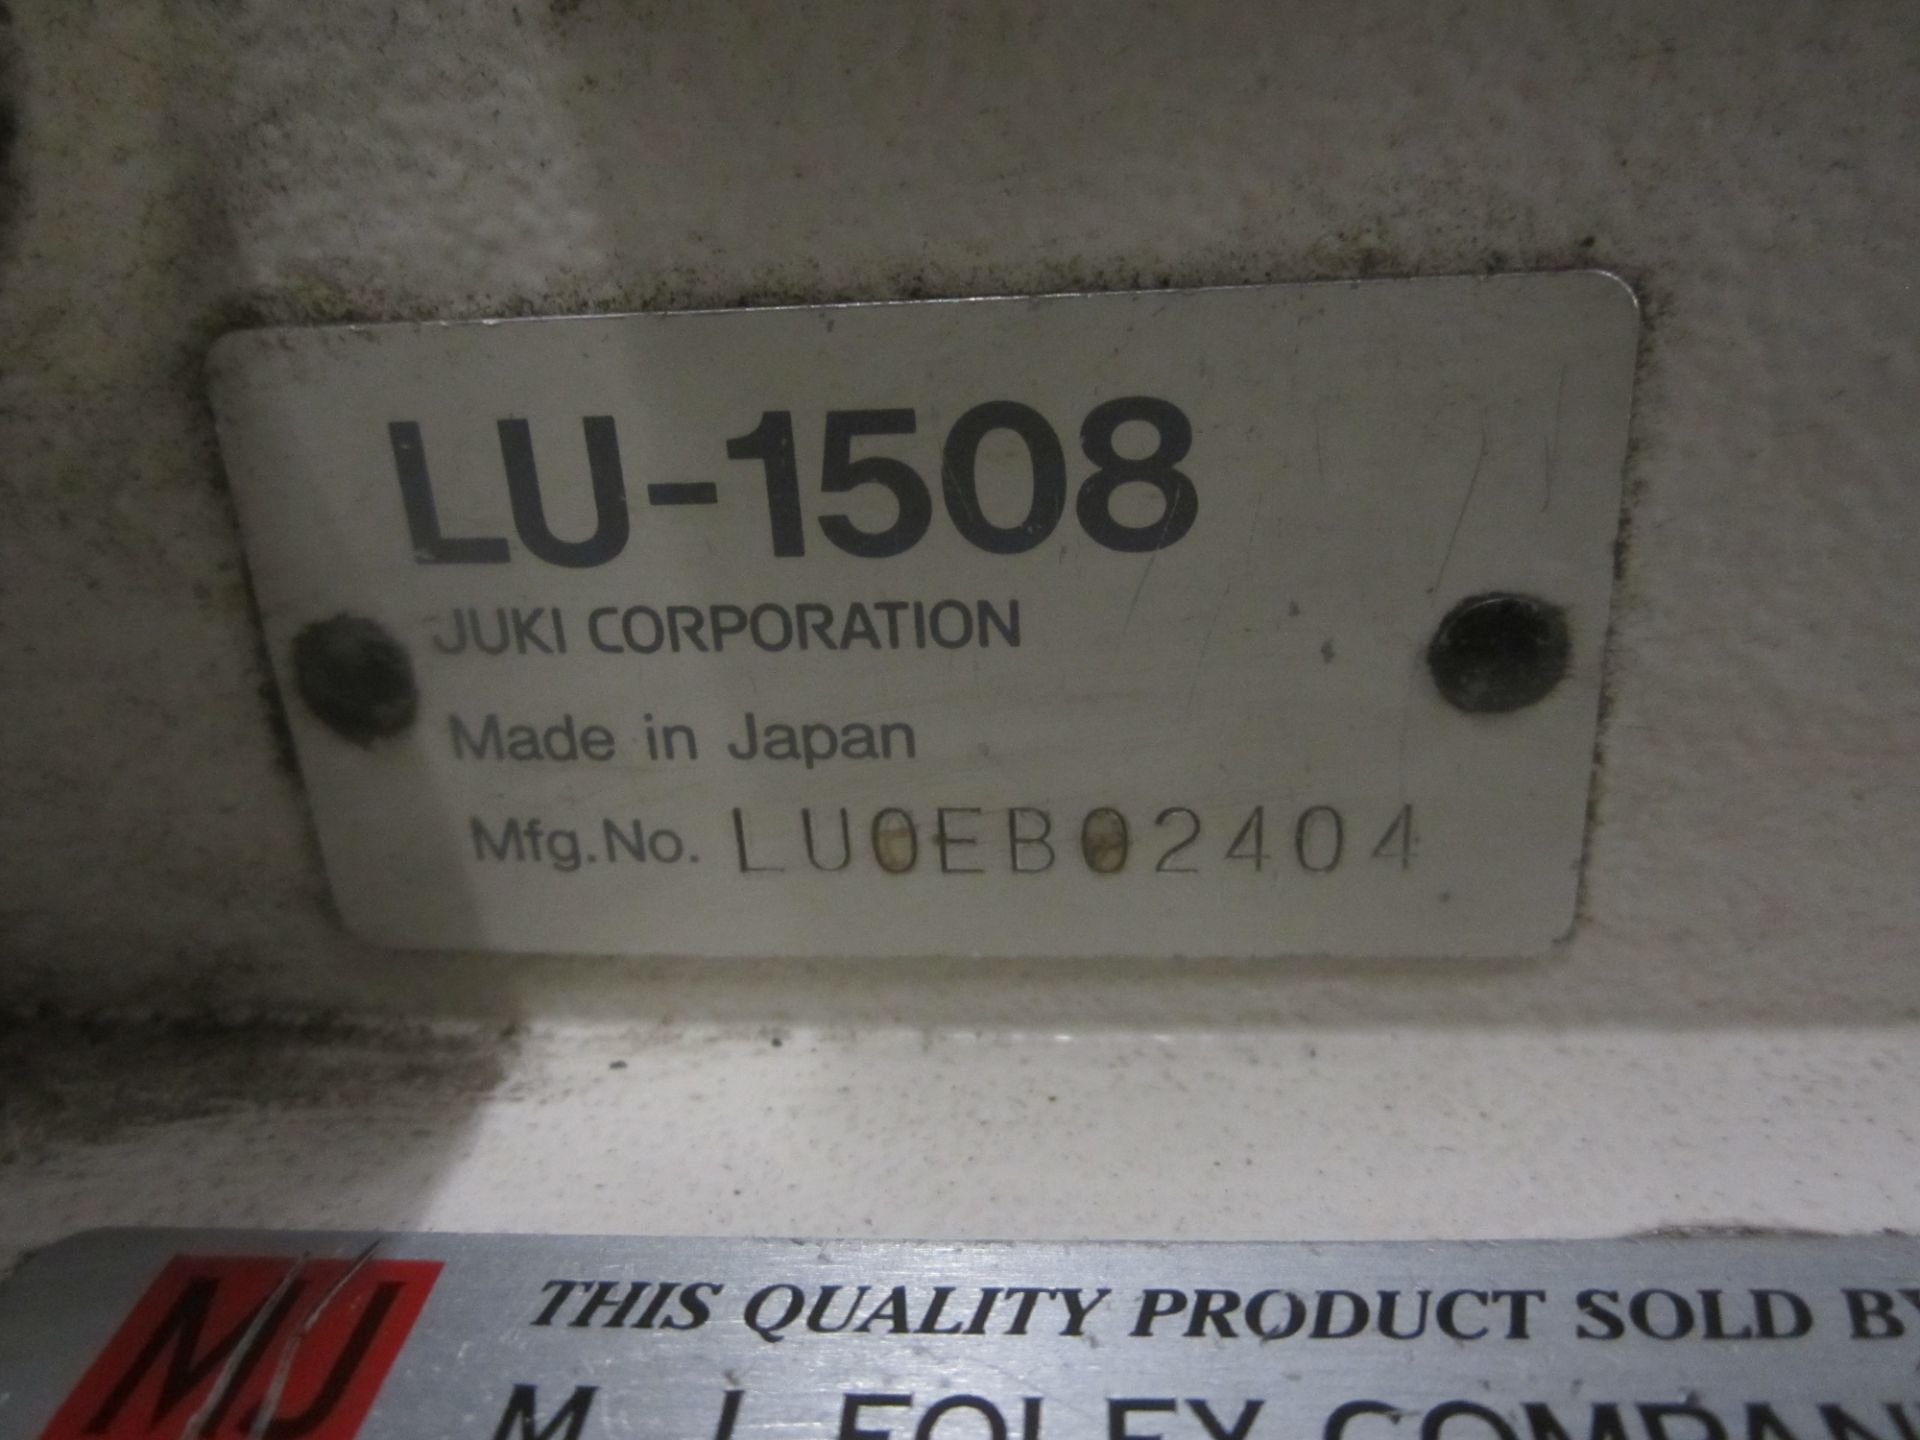 Juki Model LU-1508 Industrial Sewing Machine, s/n LU0EB02404, with Table - Image 4 of 4